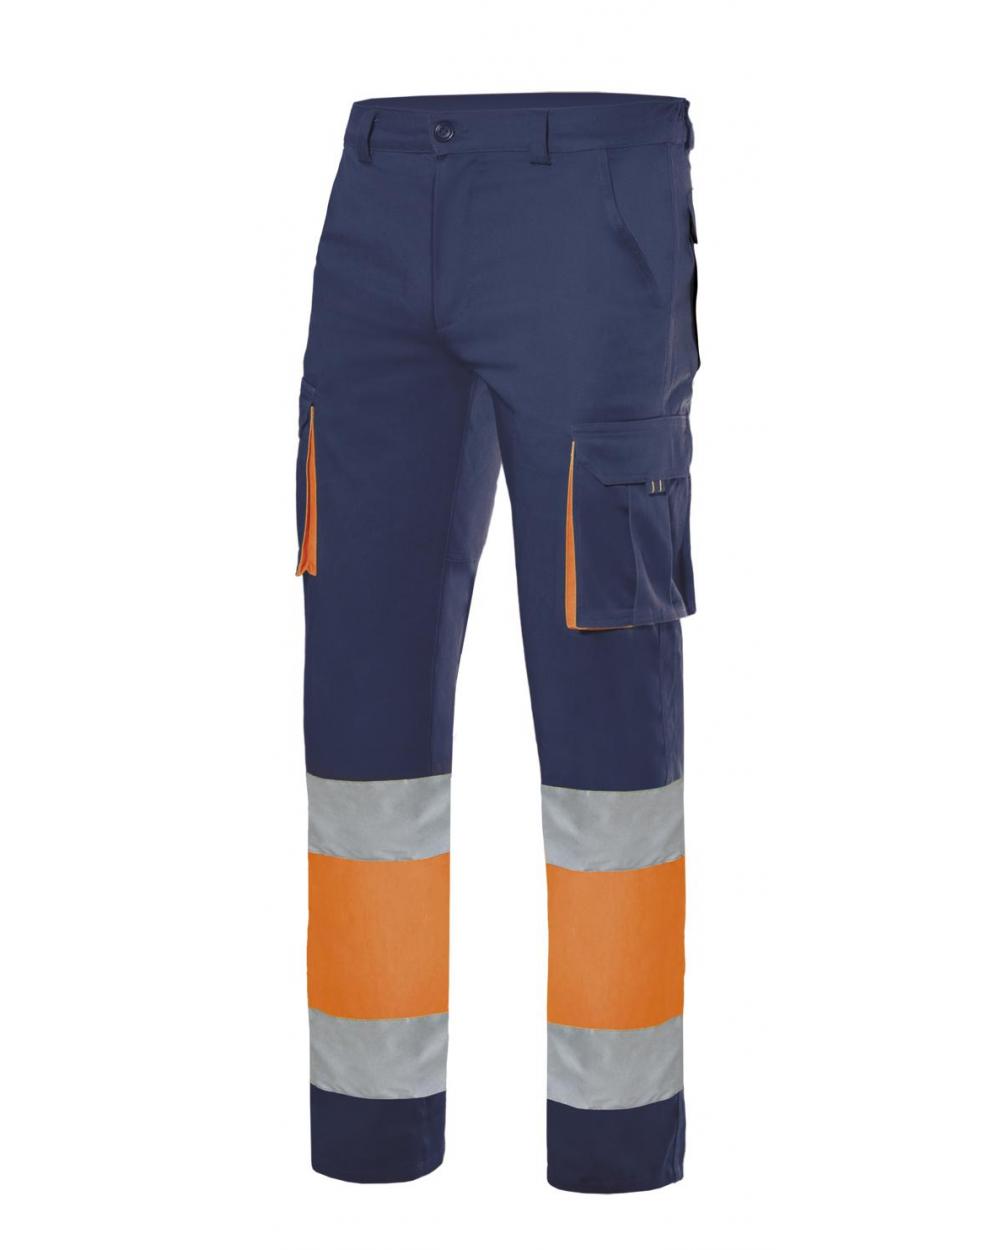 Comprar Pantalón 100% algodón bicolor alta visibilidad serie 303007 online barato Azul Navy